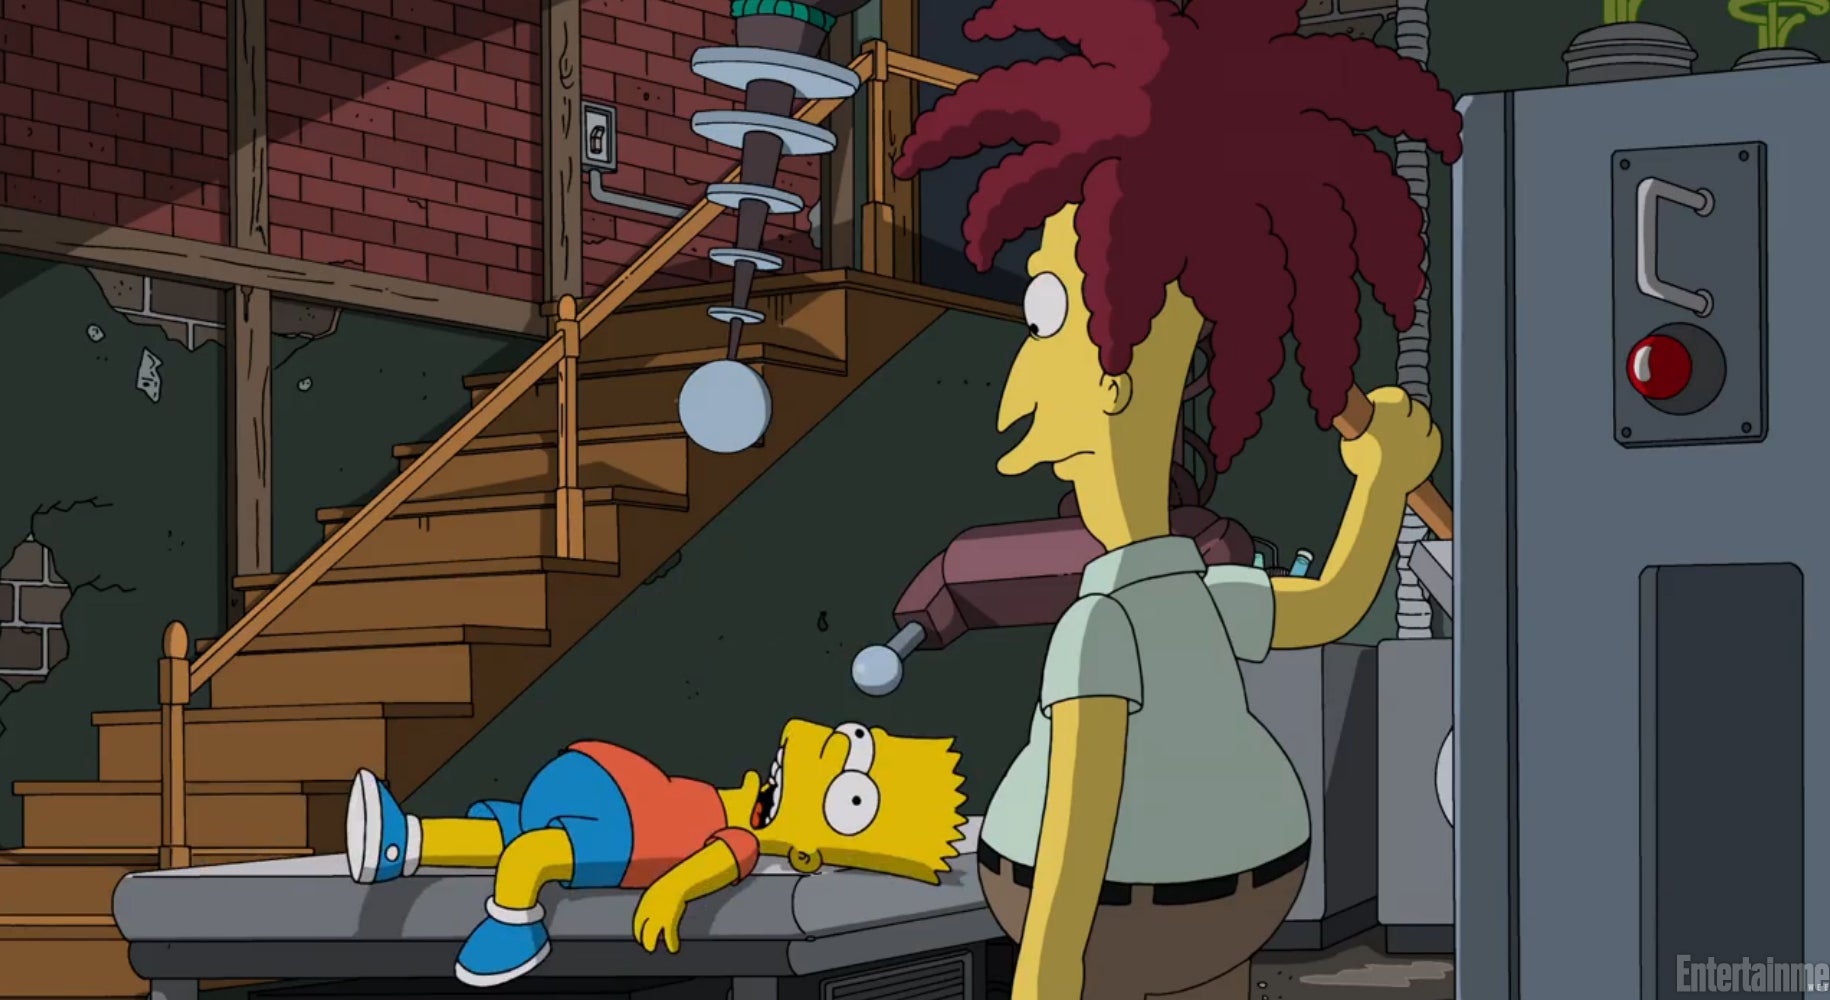 Sideshow Bob finally killing Bart Simpson